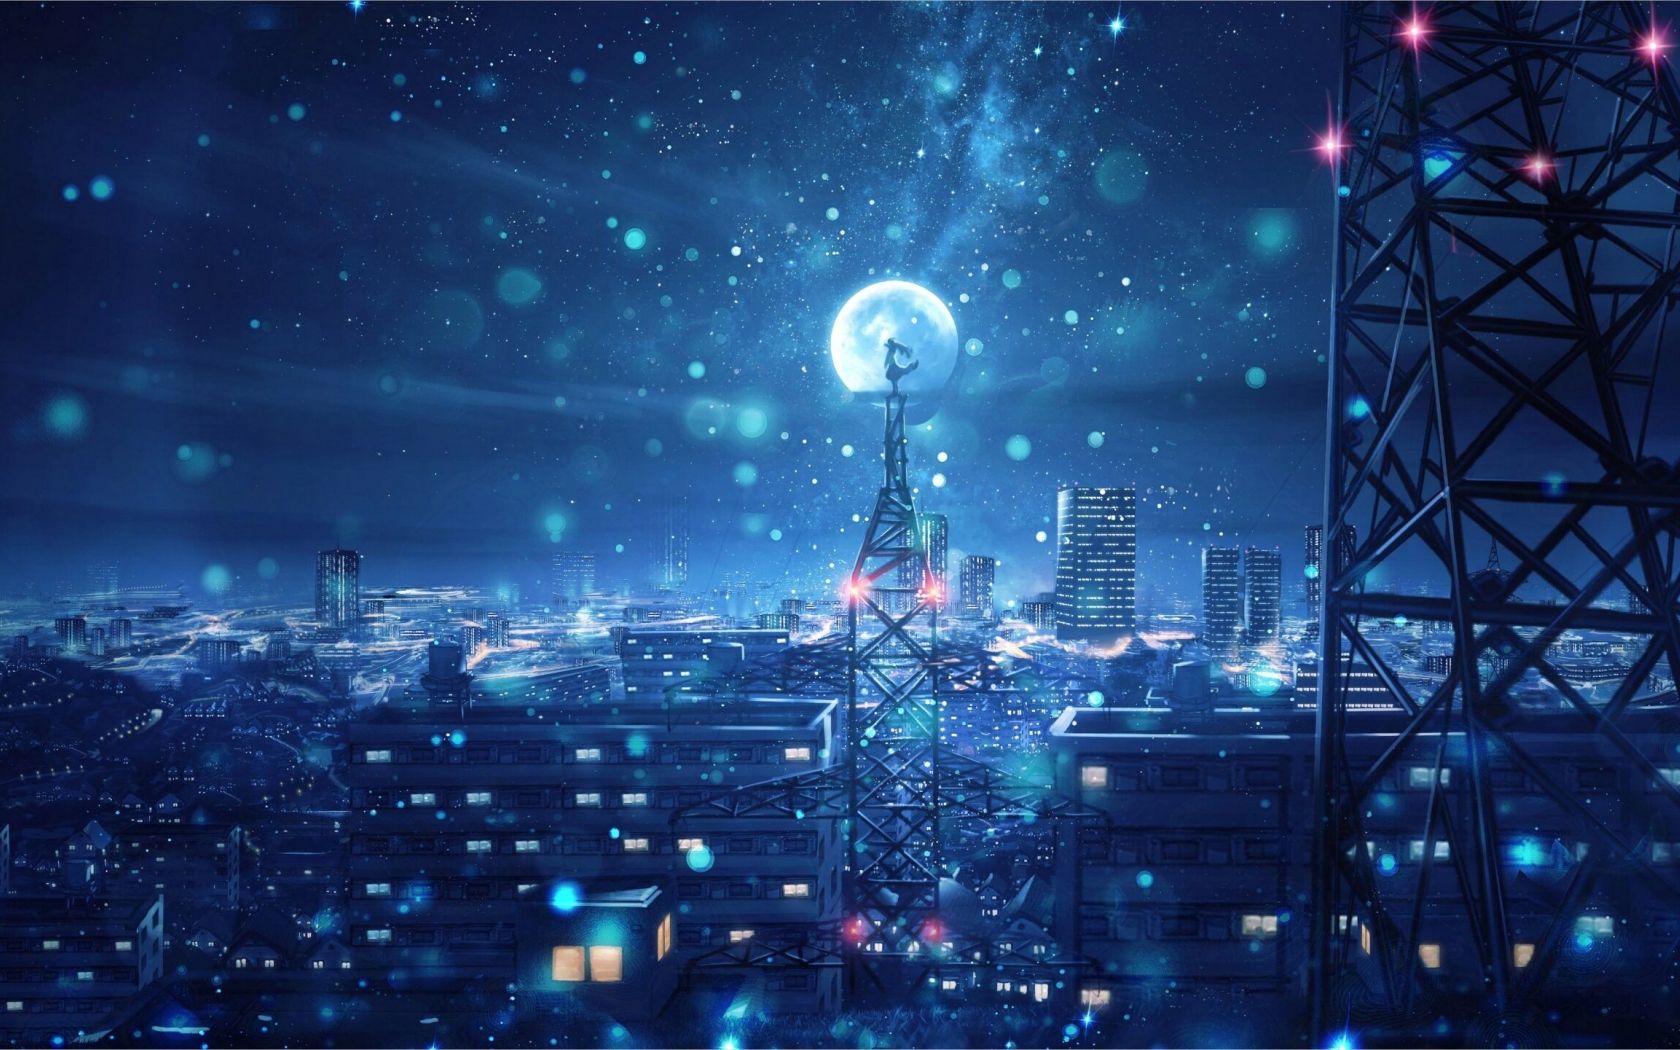 Free download 4k Anime Scenery Wallpaper in 2020 Sky anime Night